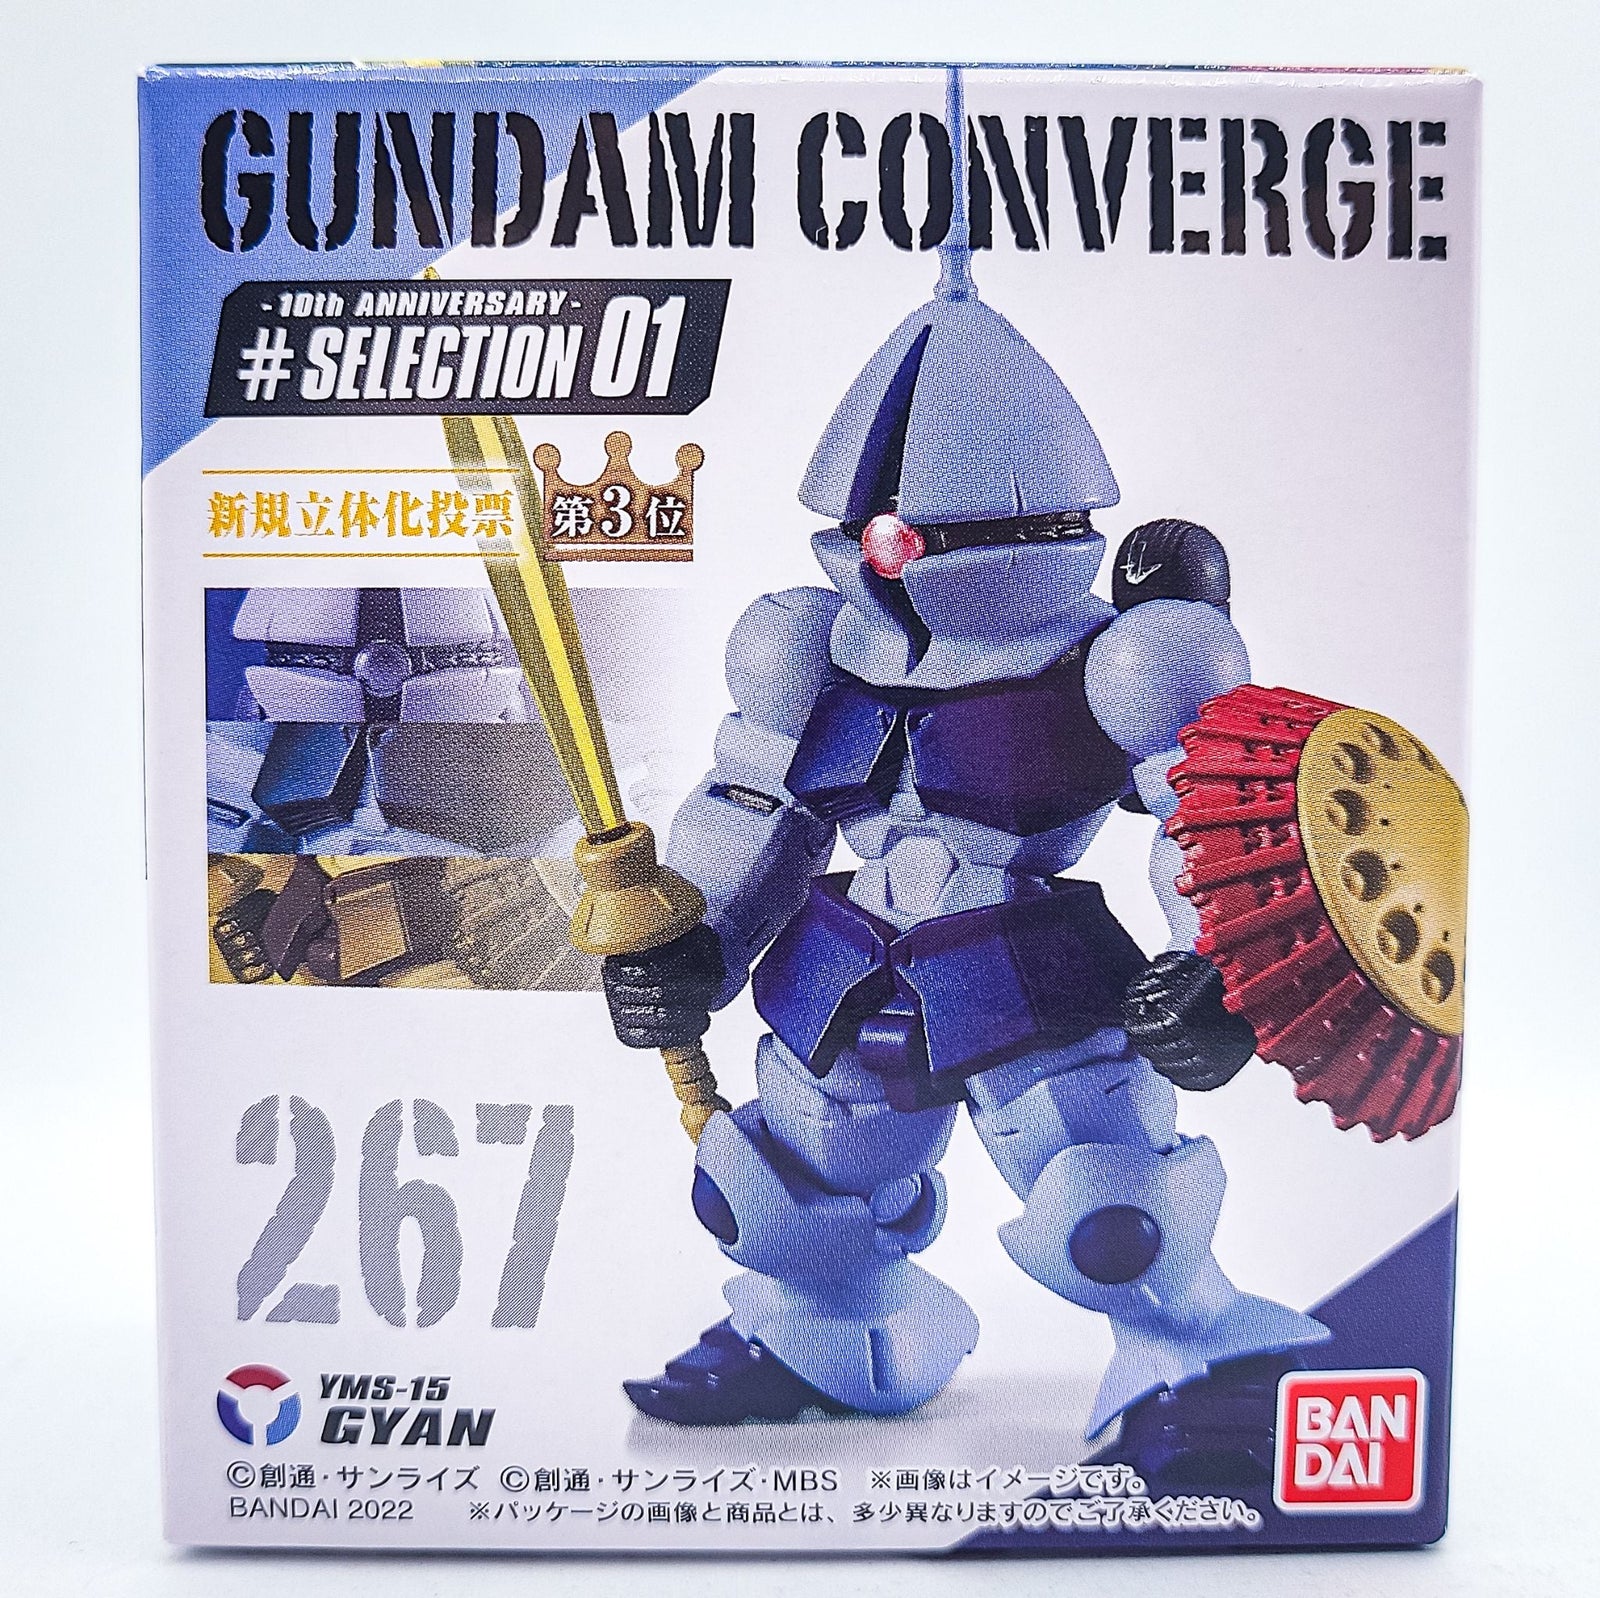 Gundam Converge #267 GYAN by Bandai - 1